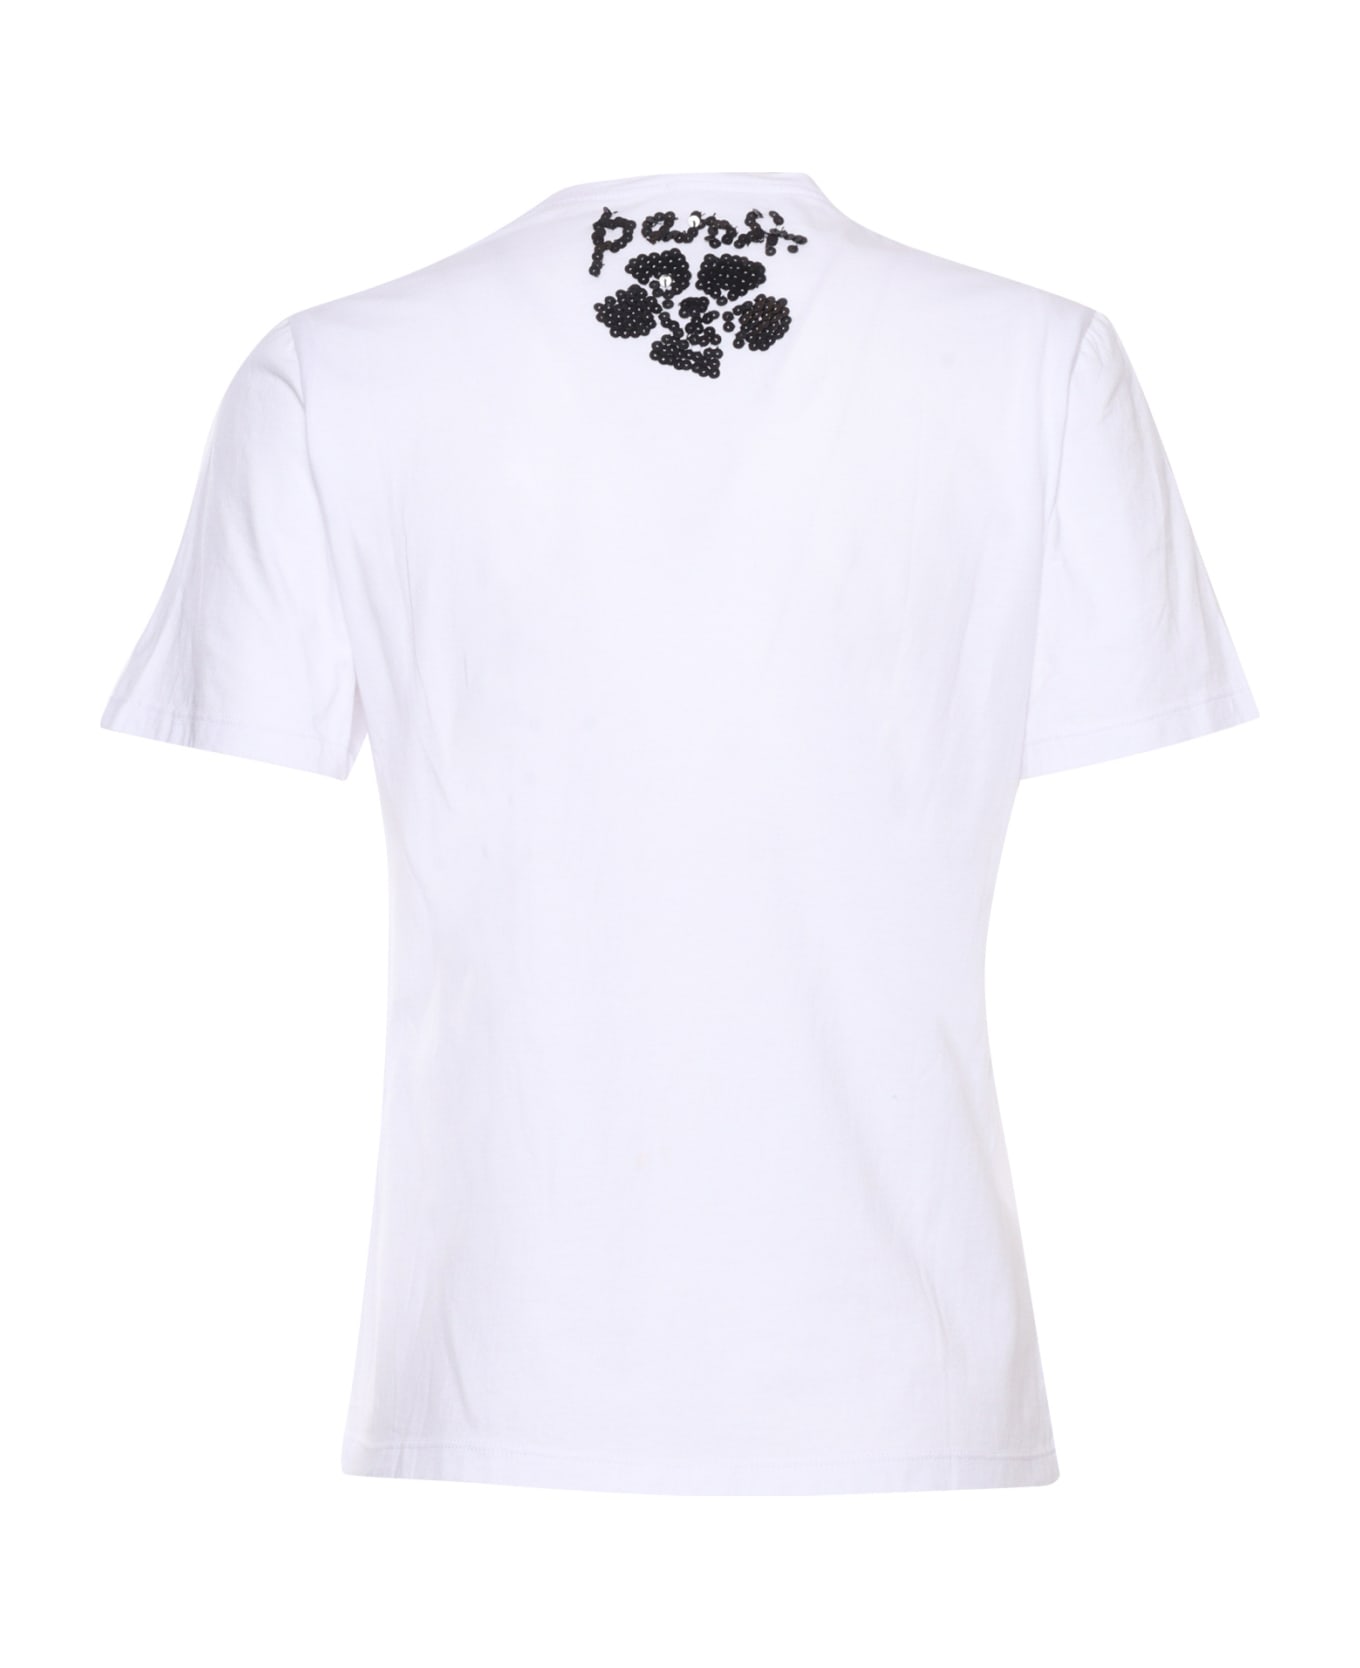 Parosh White T-shirt With Paillettes - WHITE